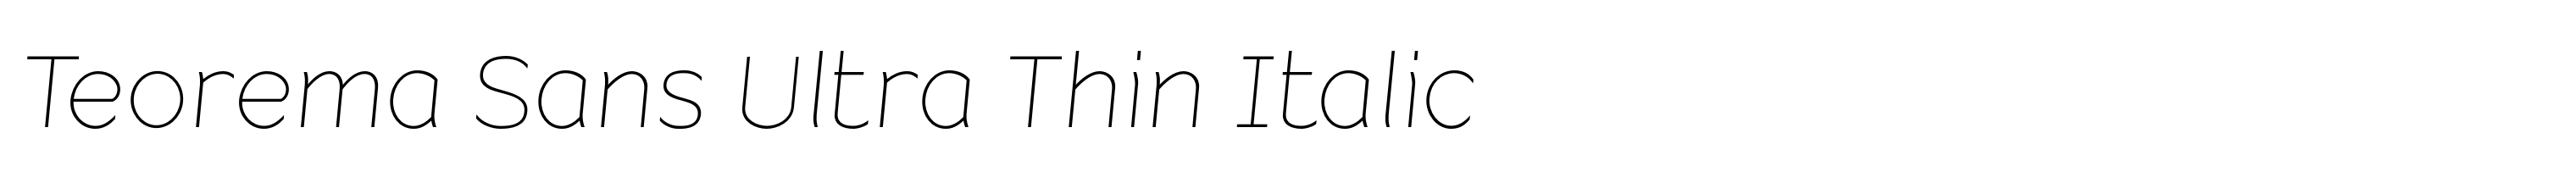 Teorema Sans Ultra Thin Italic